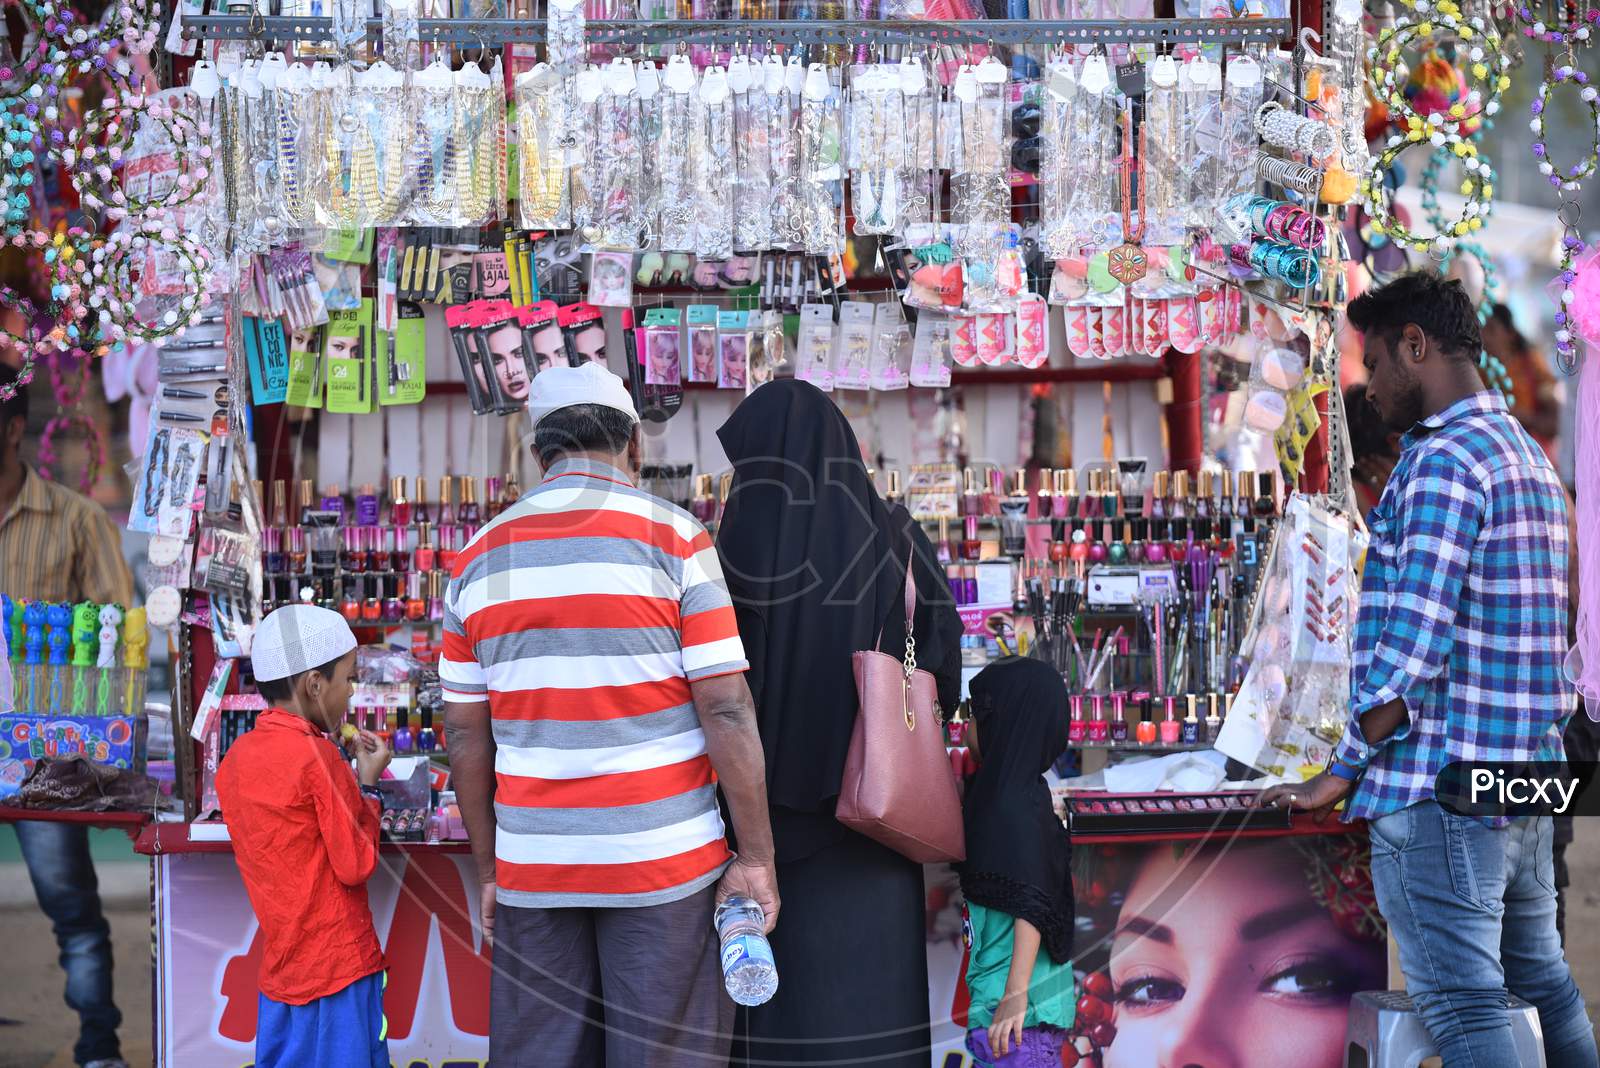 A Muslim Woman Shopping Woman Novelties At a Stall